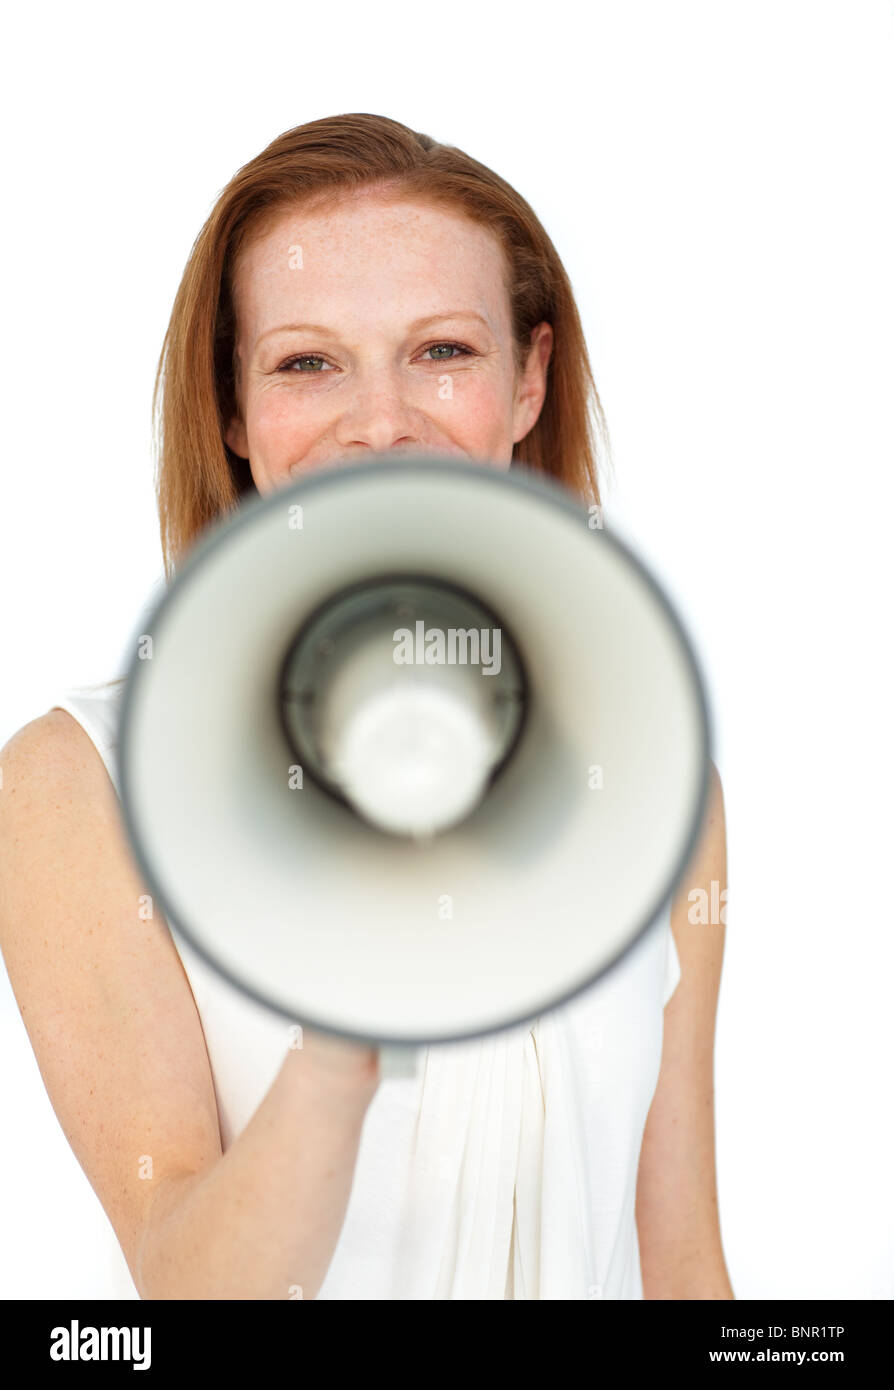 Smiling businesswoman using a megaphone Banque D'Images